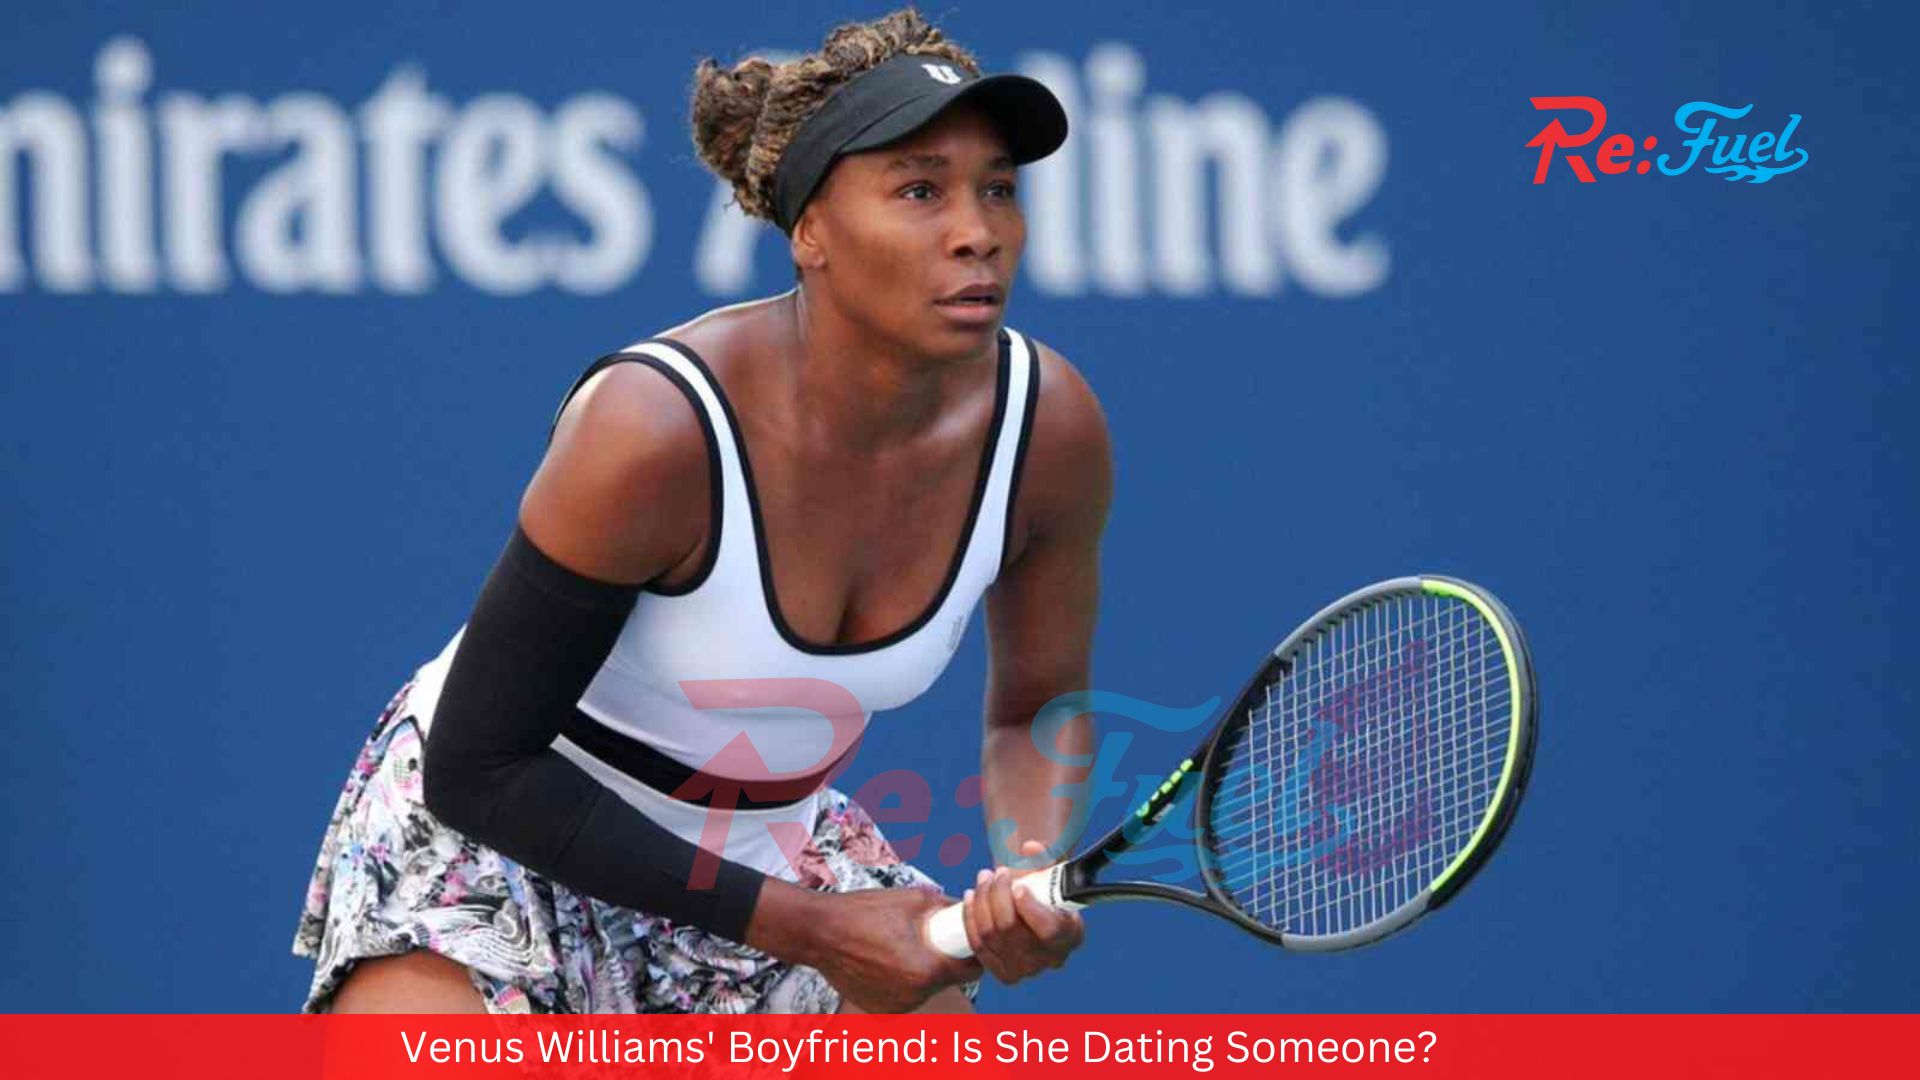 Venus Williams' Boyfriend: Is She Dating Someone?